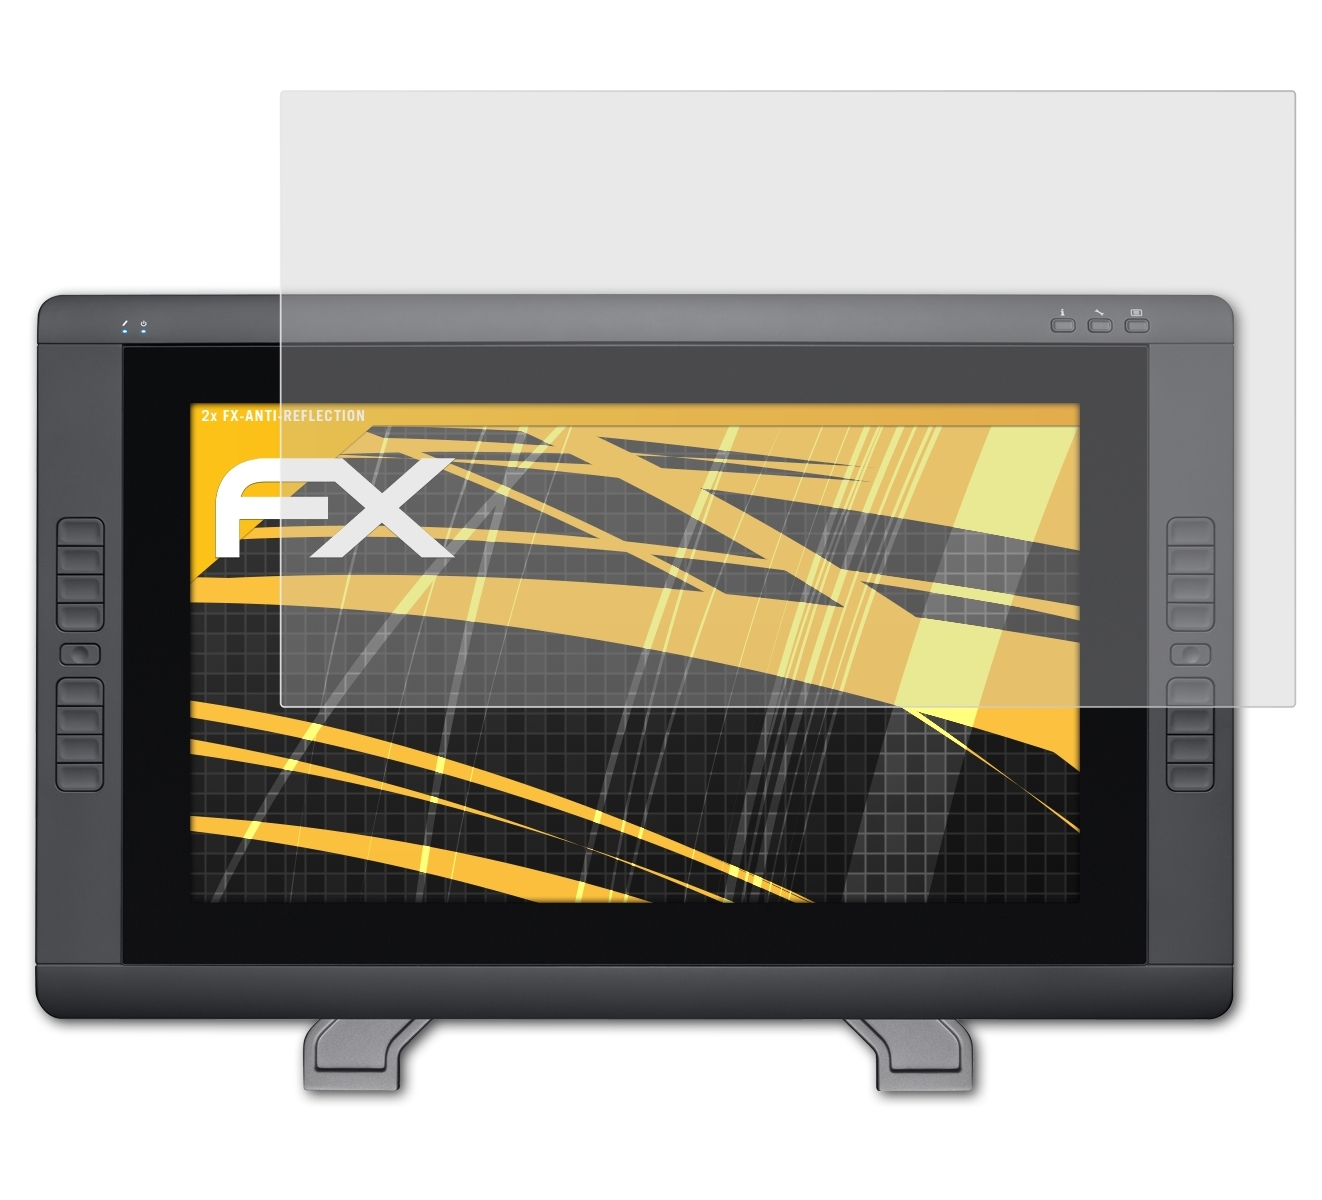 ATFOLIX 2x FX-Antireflex Displayschutz(für Wacom 22 HD) CINTIQ